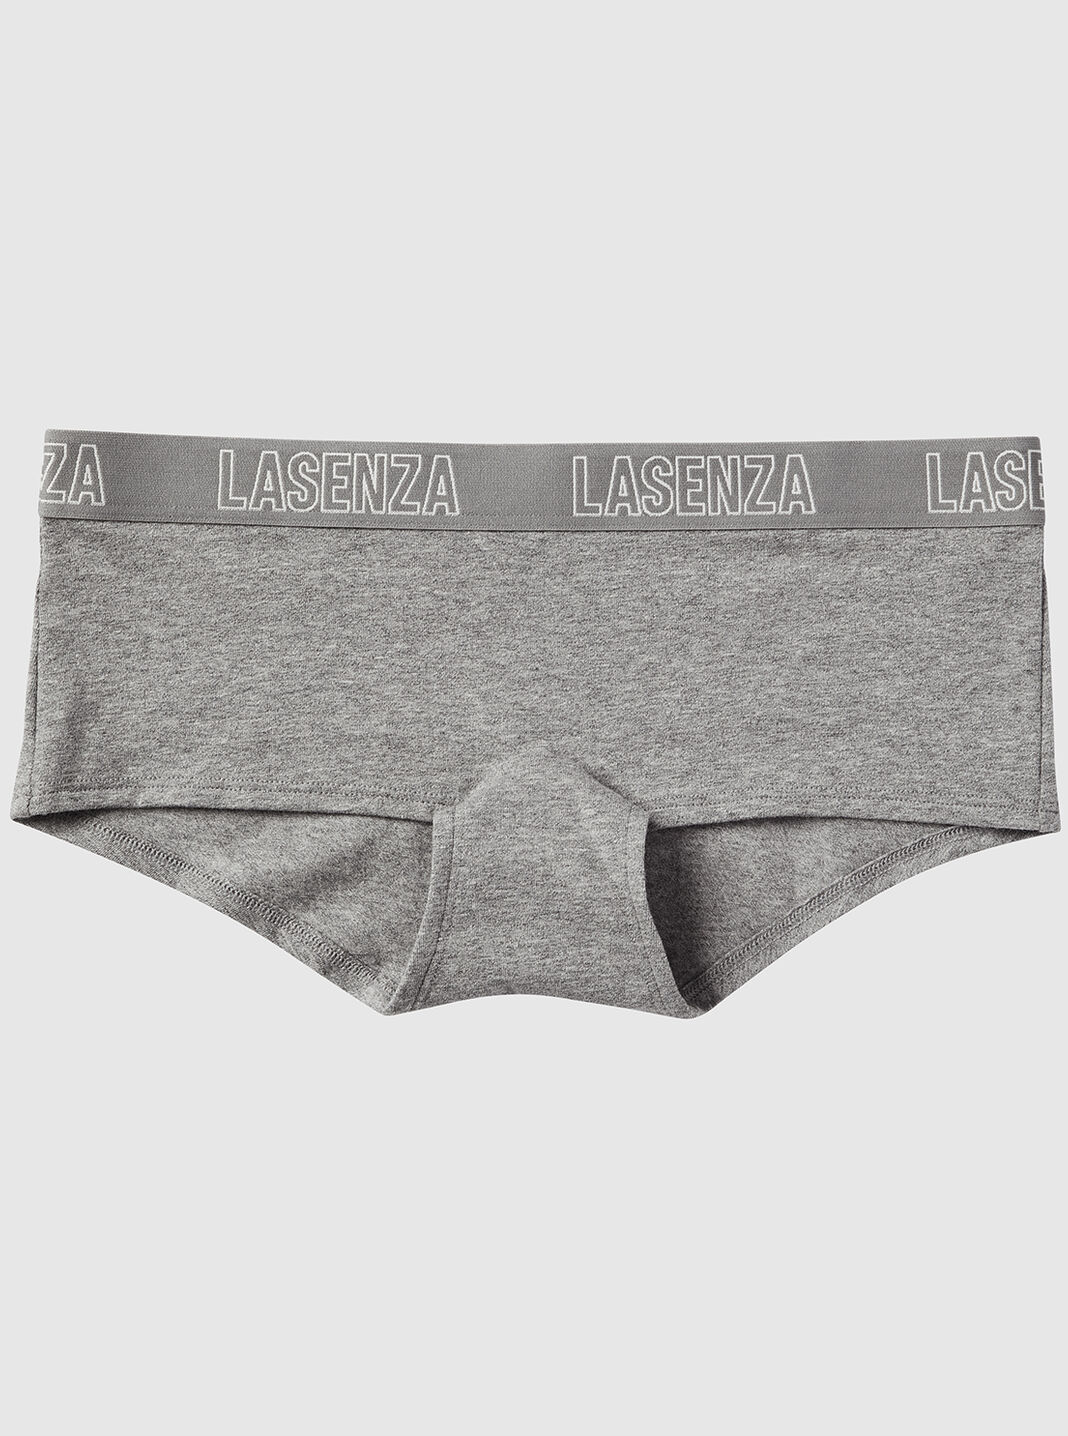 LALESTE Cotton Boy Shorts Underwear for Women Stretch Boyshorts Panties  Ladies Boxer Briefs 5 Pack, B2205cot-1, Large : : Clothing, Shoes  & Accessories